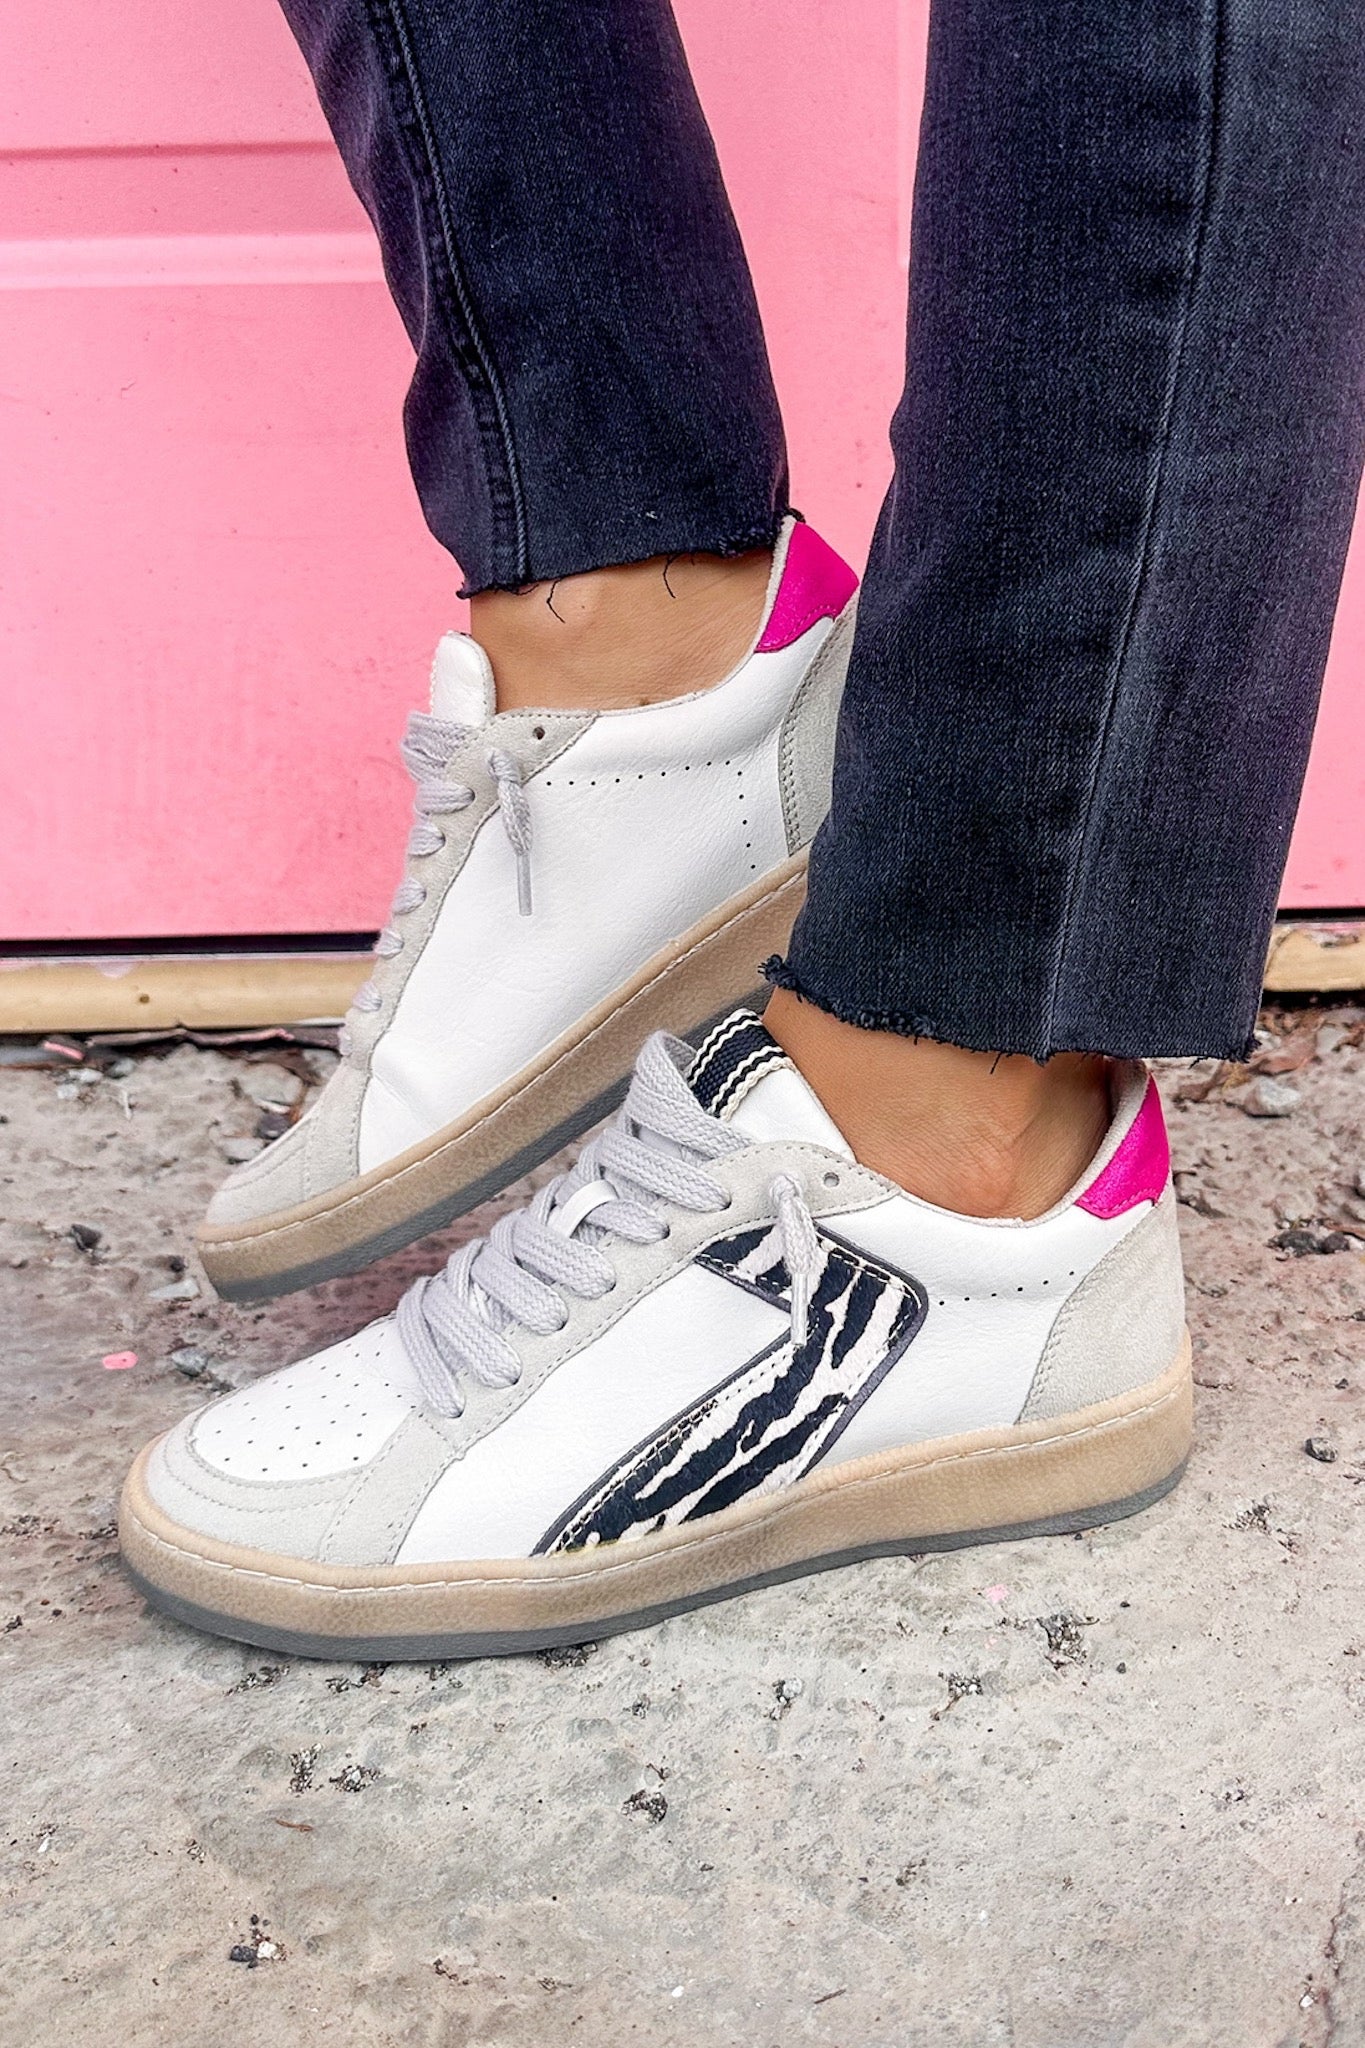 The Salma Zebra Sneaker by ShuShop